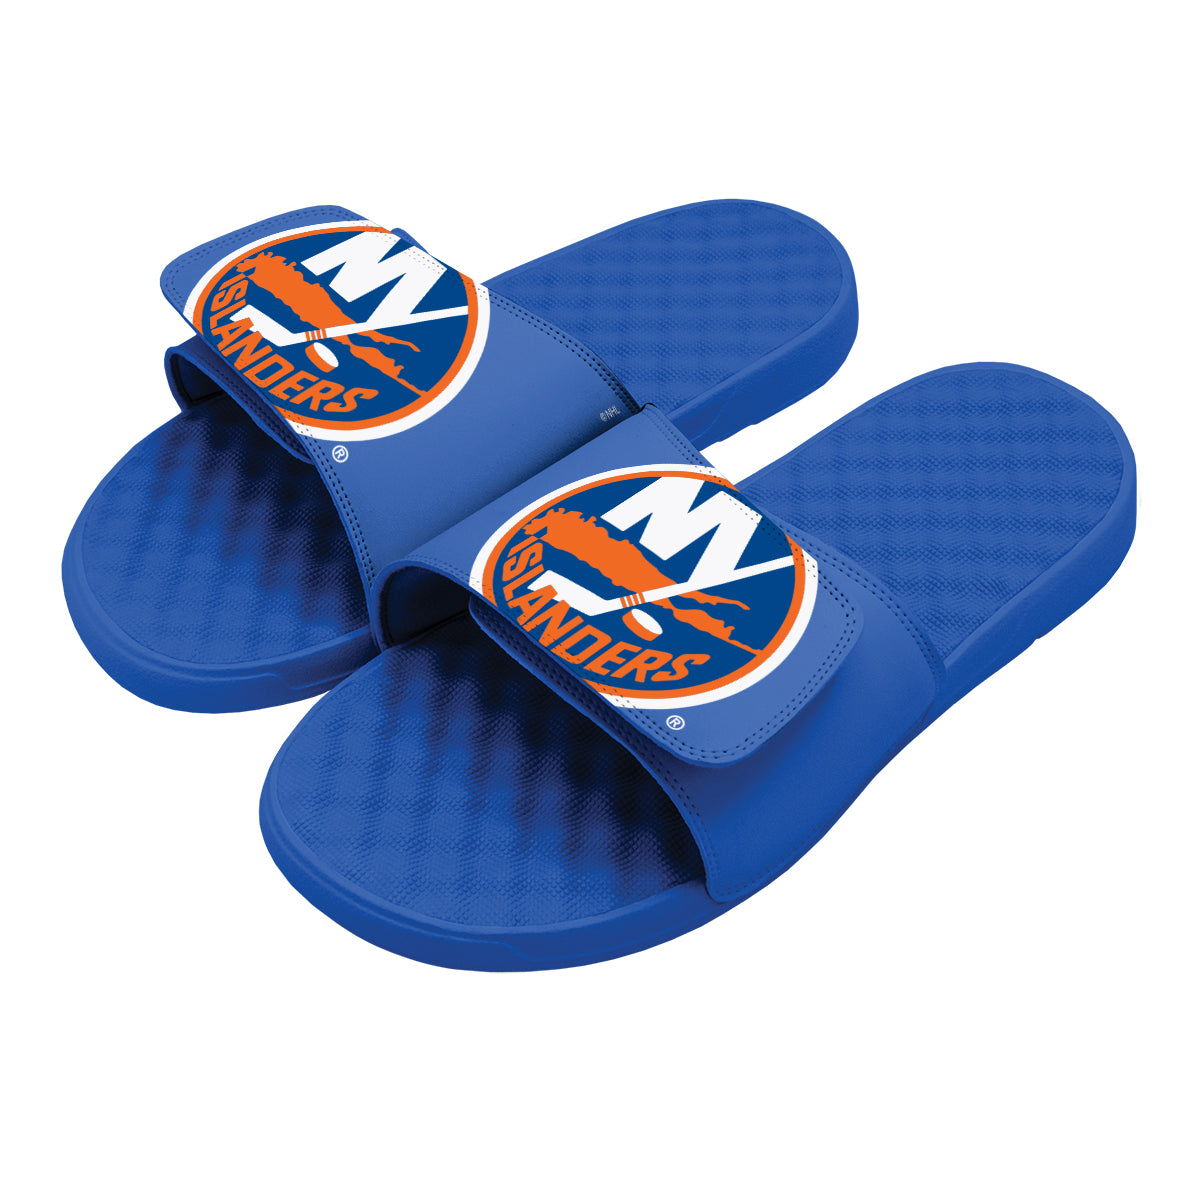 New York Islanders Blown Up Slides